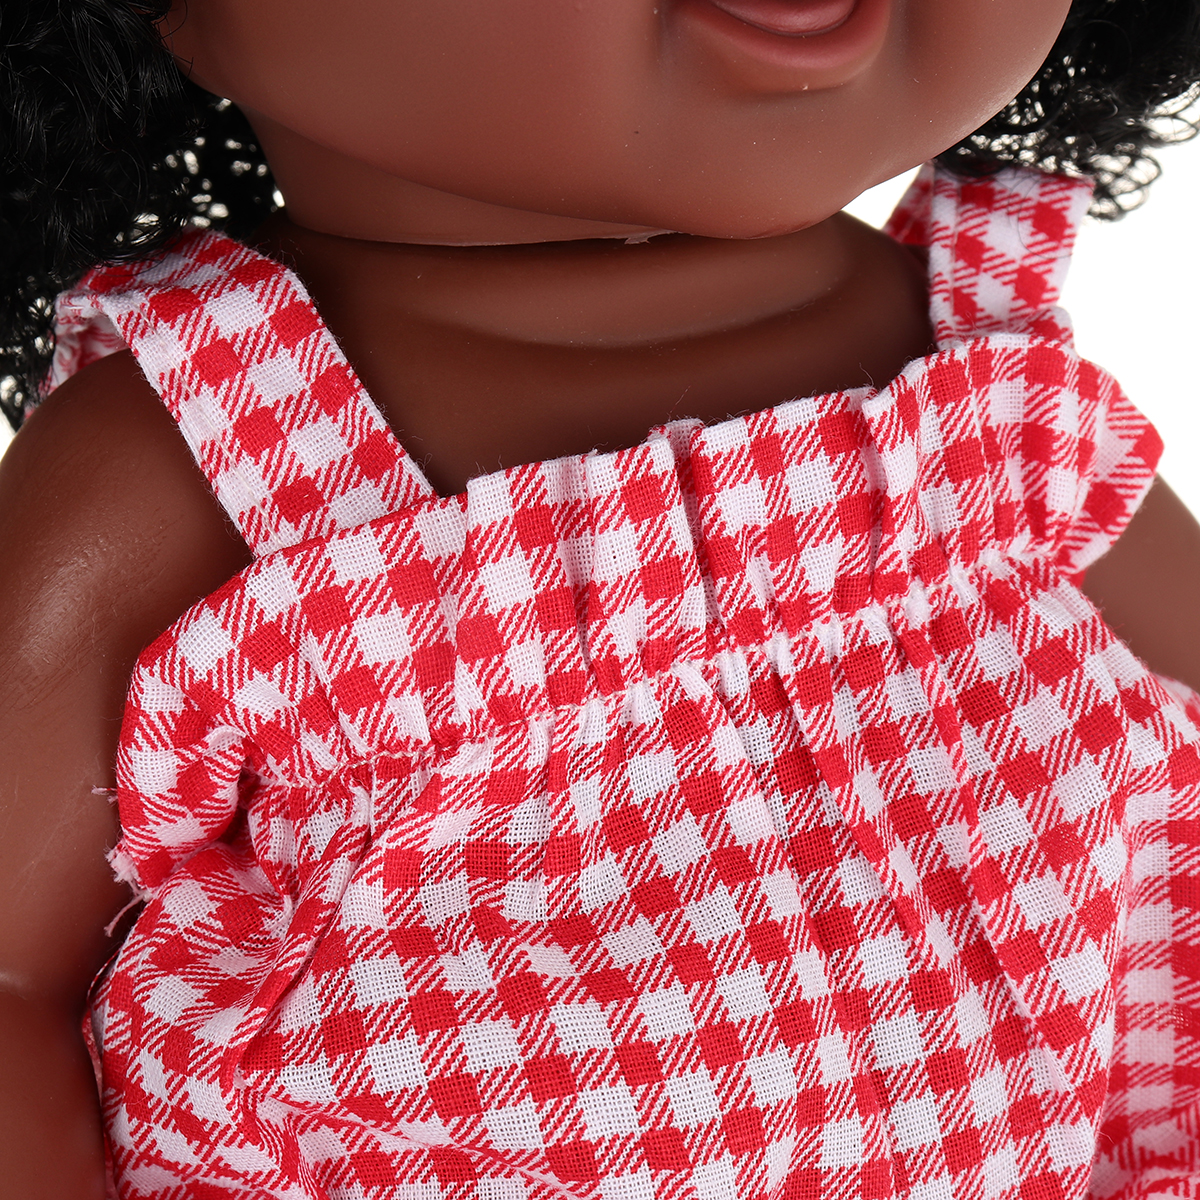 12Inch-Soft-Silicone-Vinyl-PVC-Black-Baby-Fashion-Doll-Rotate-360deg-African-Girl-Perfect-Reborn-Dol-1734365-8